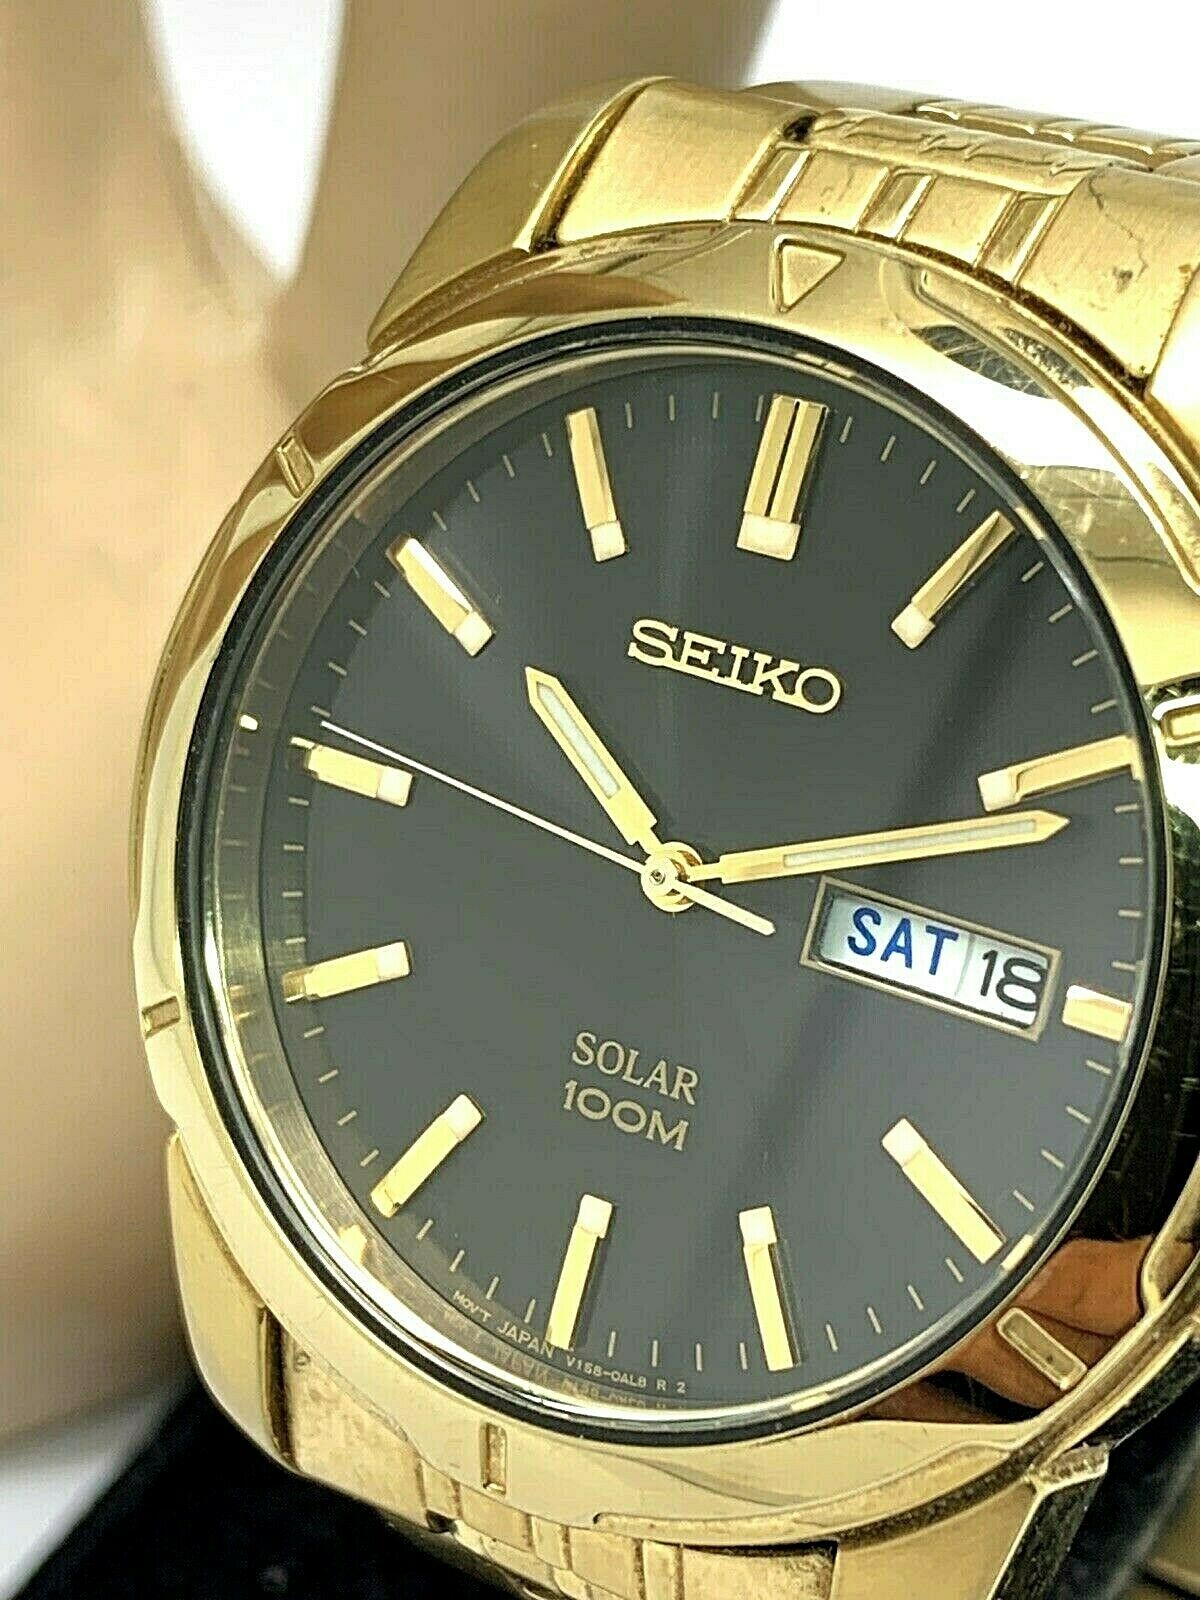 Seiko Men's Watch Solar 100m Gold Tone Watch Day Date SNE100 